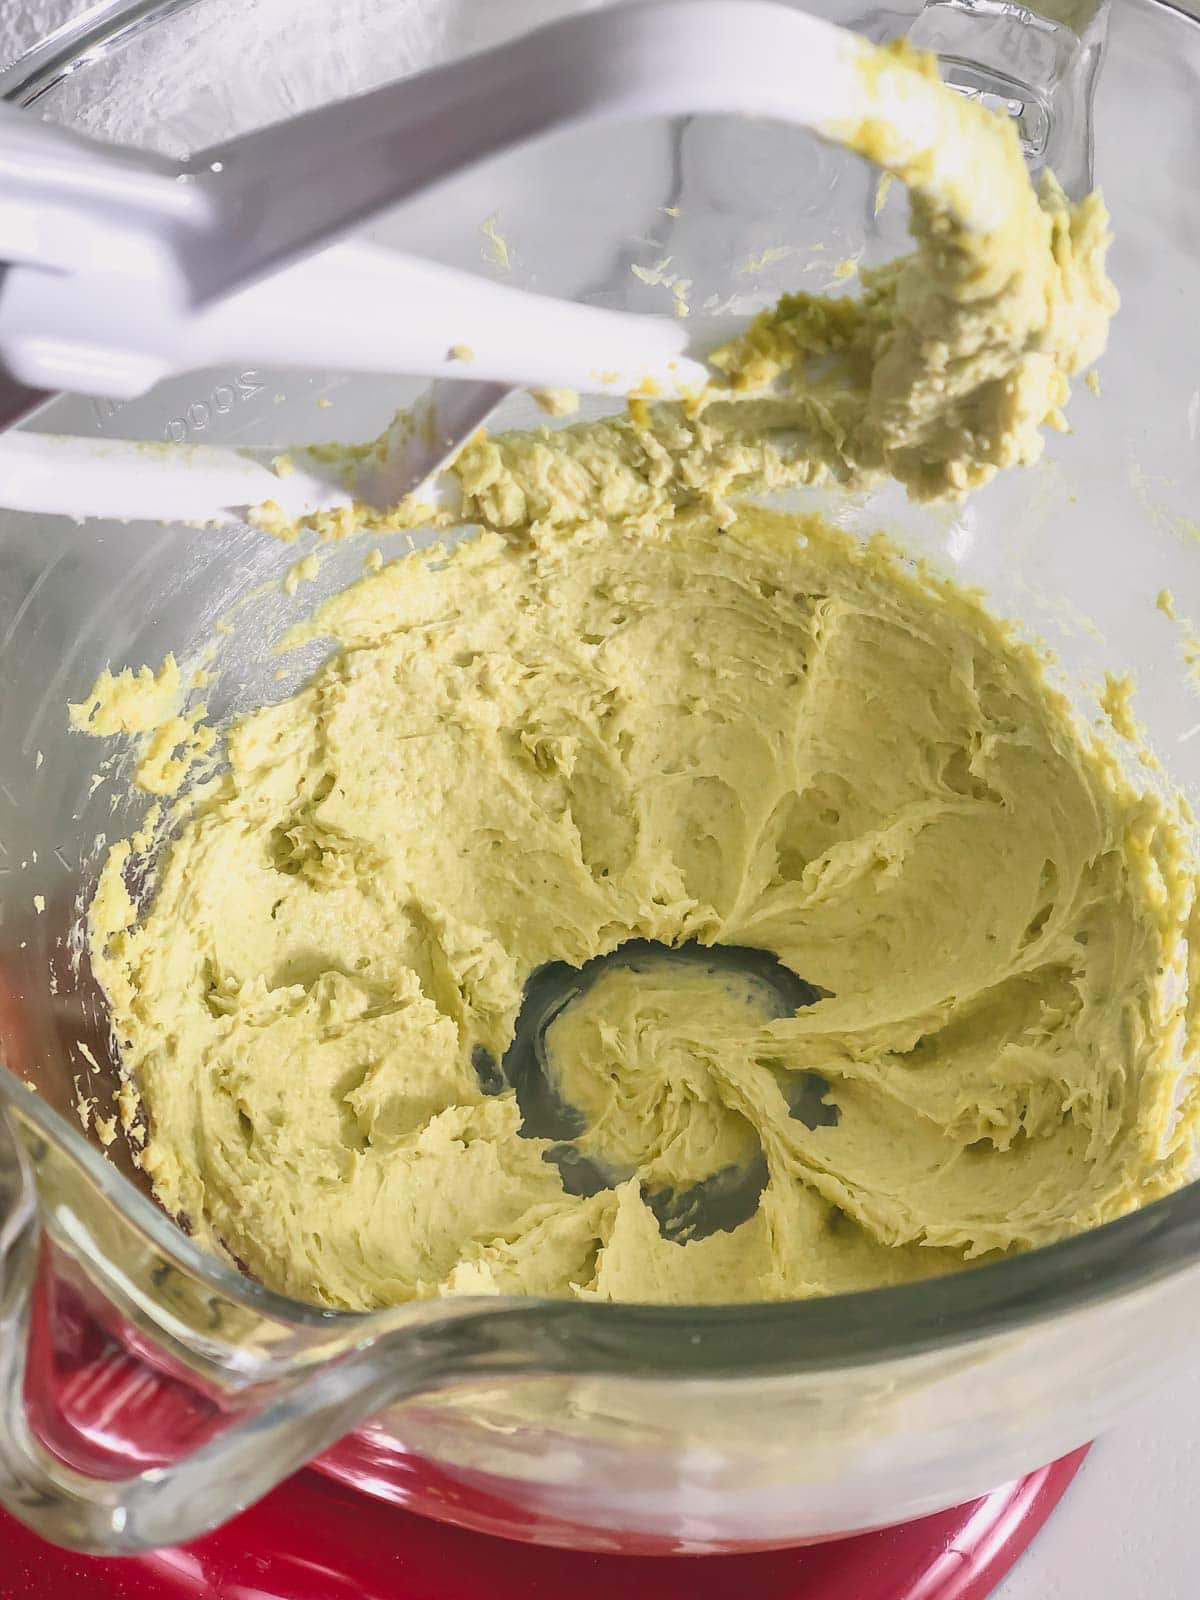 Pistachio buttercream in a mixing bowl.